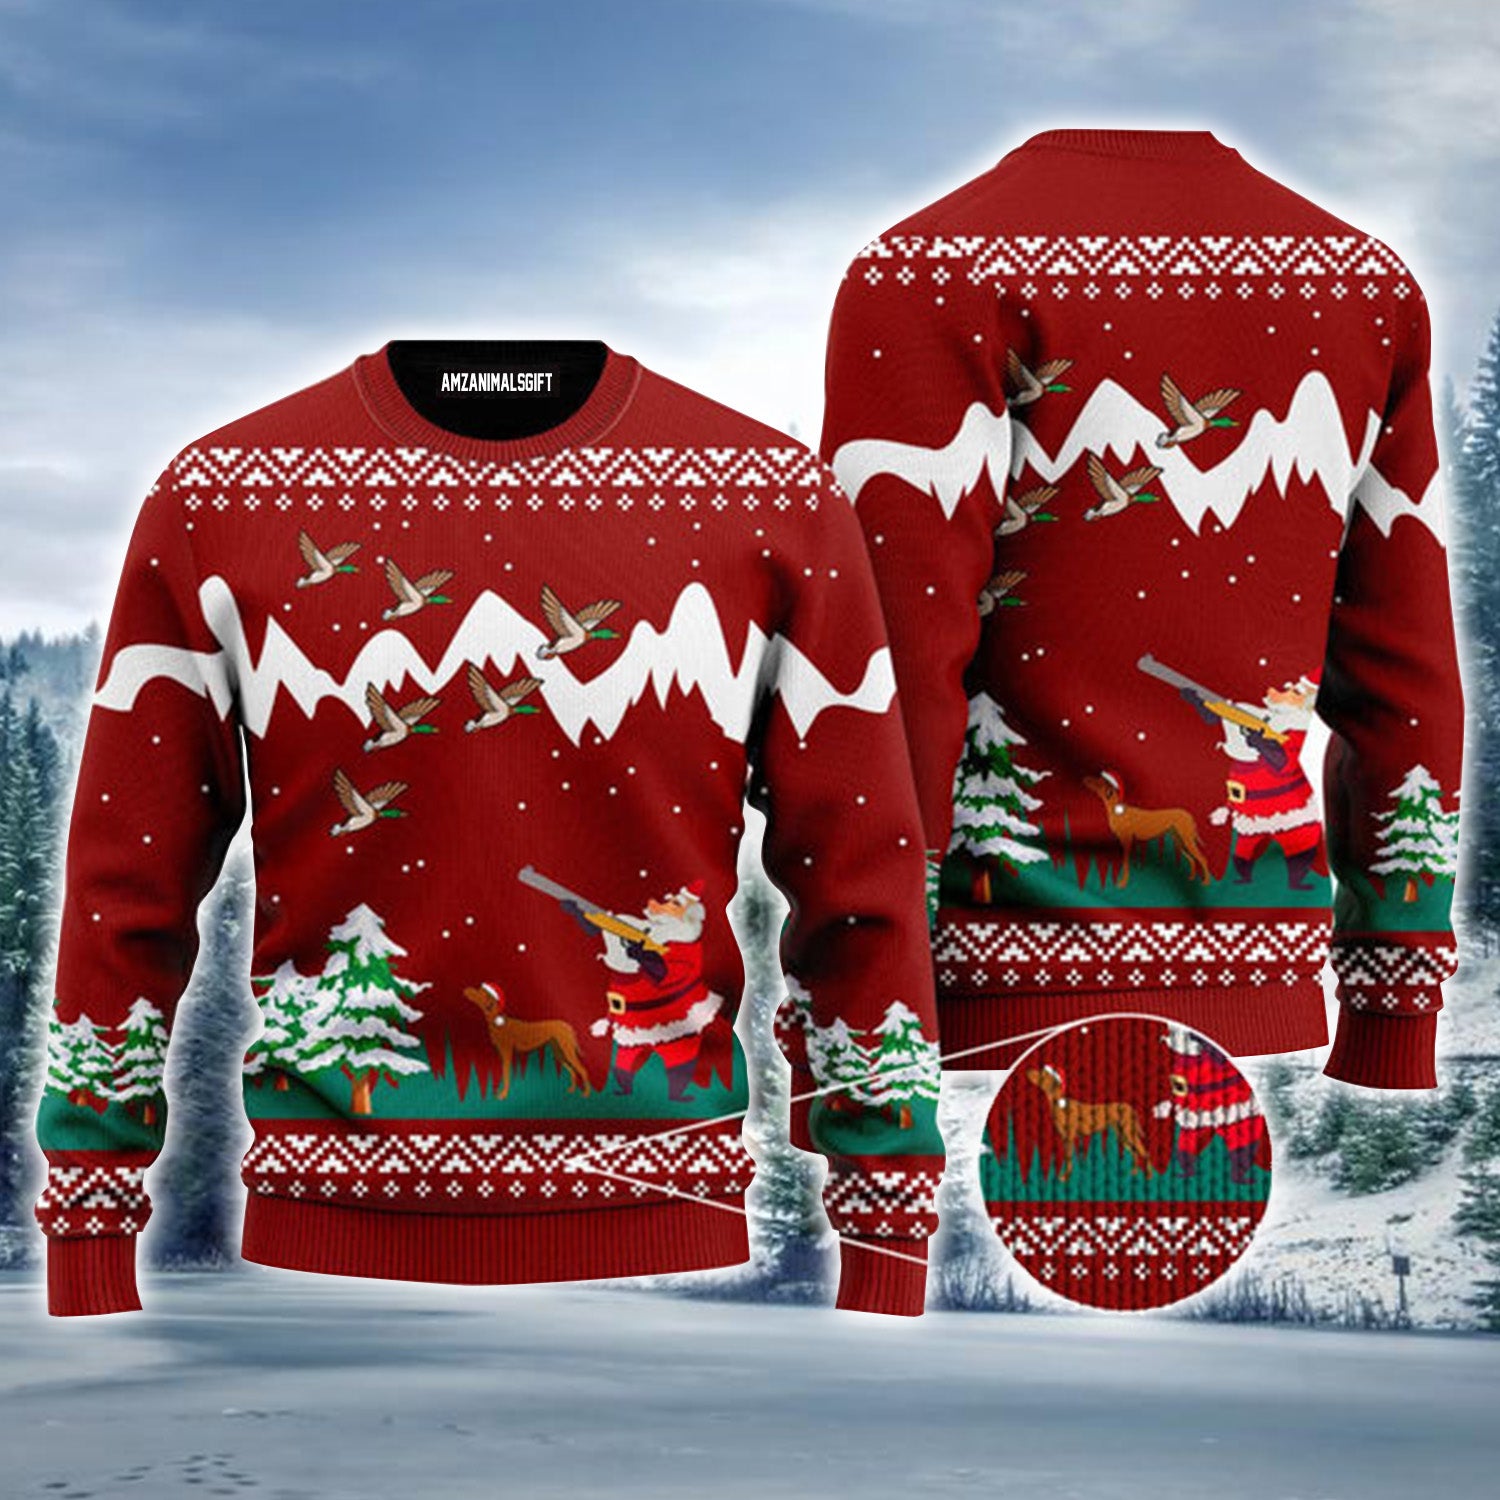 Santa Duck Hunting Red Urly Christmas Sweater, Christmas Sweater For Men & Women - Perfect Gift For Christmas, Hunting Lovers, Hunters